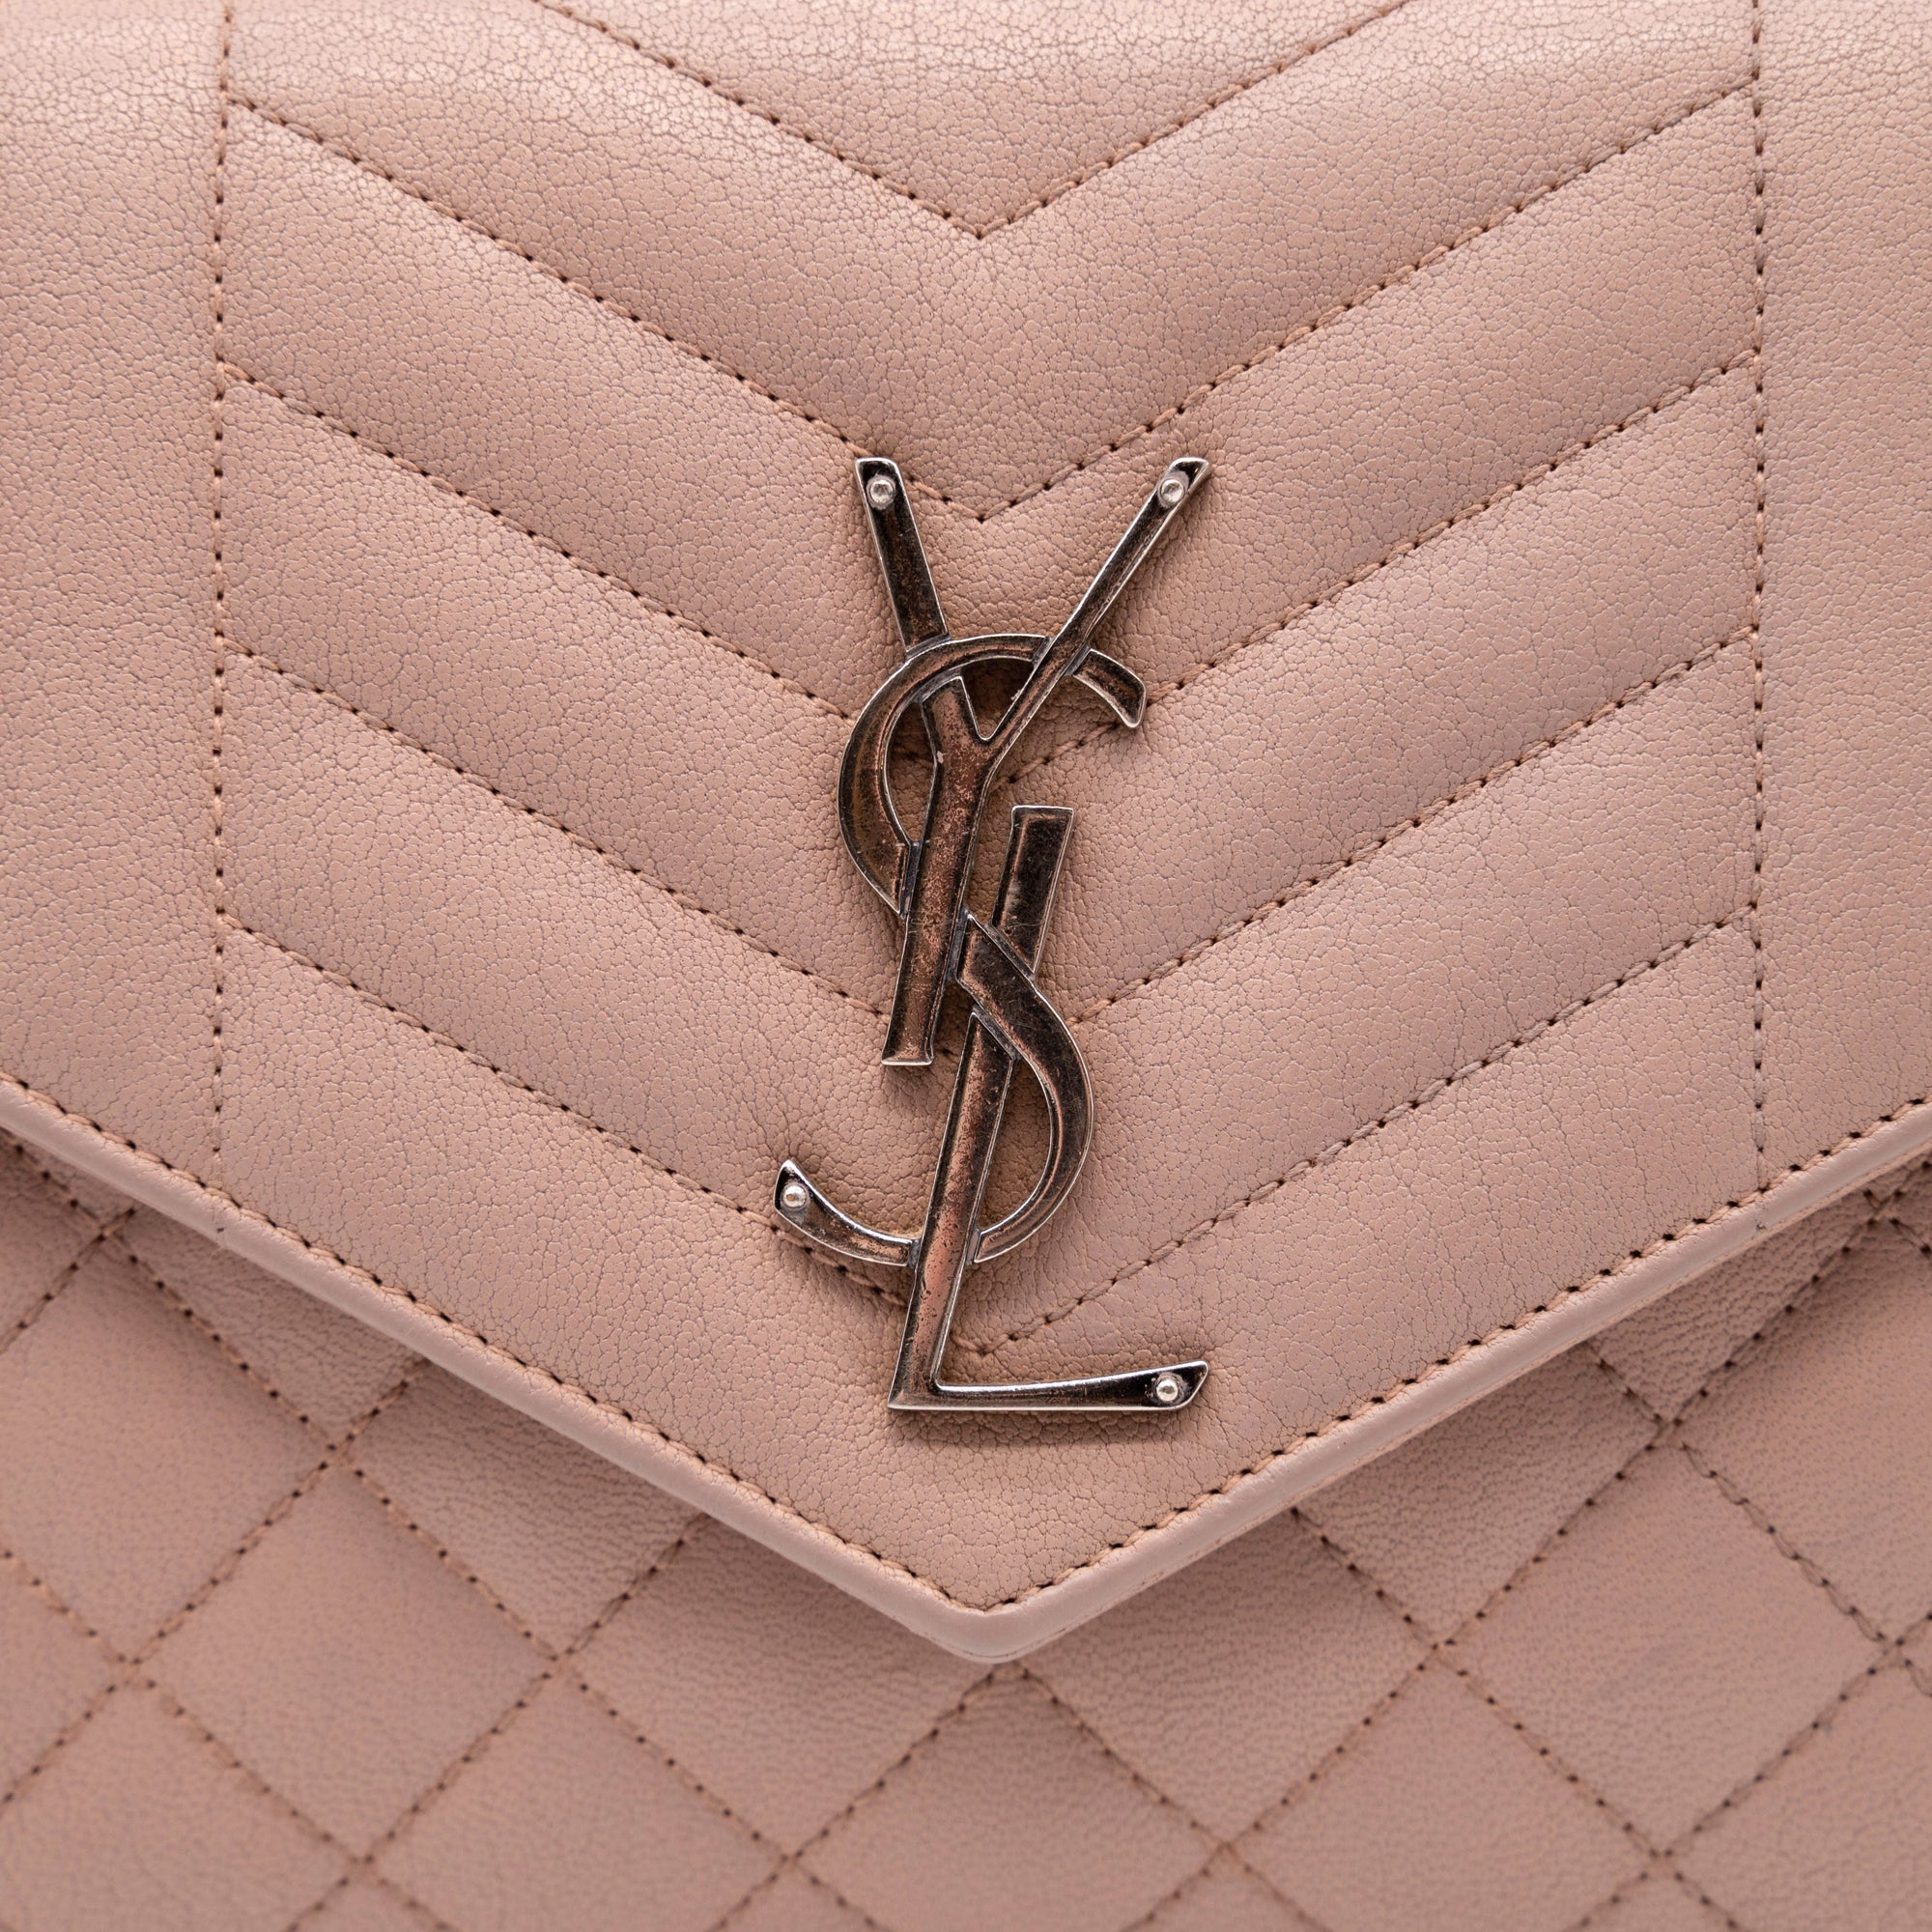 YSL Saint Laurent envelope chain wallet handbag new with tags in greyish  brown